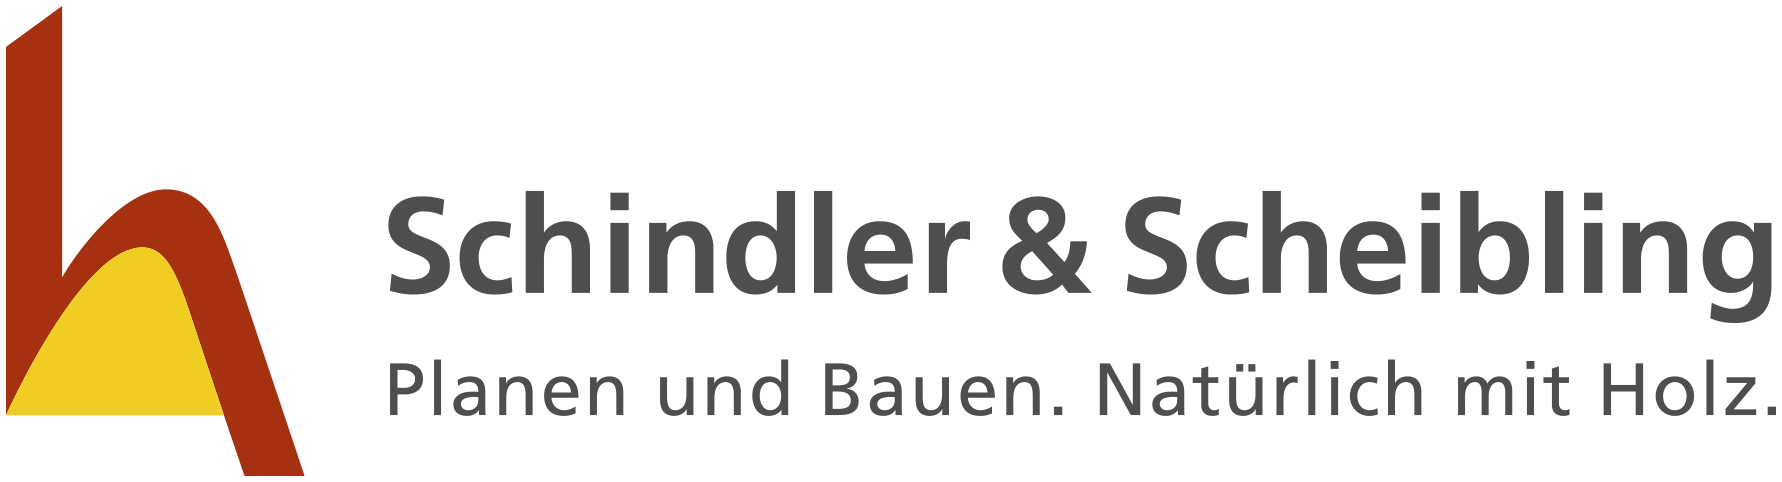 schindler_scheibling_logo_links_cmyk